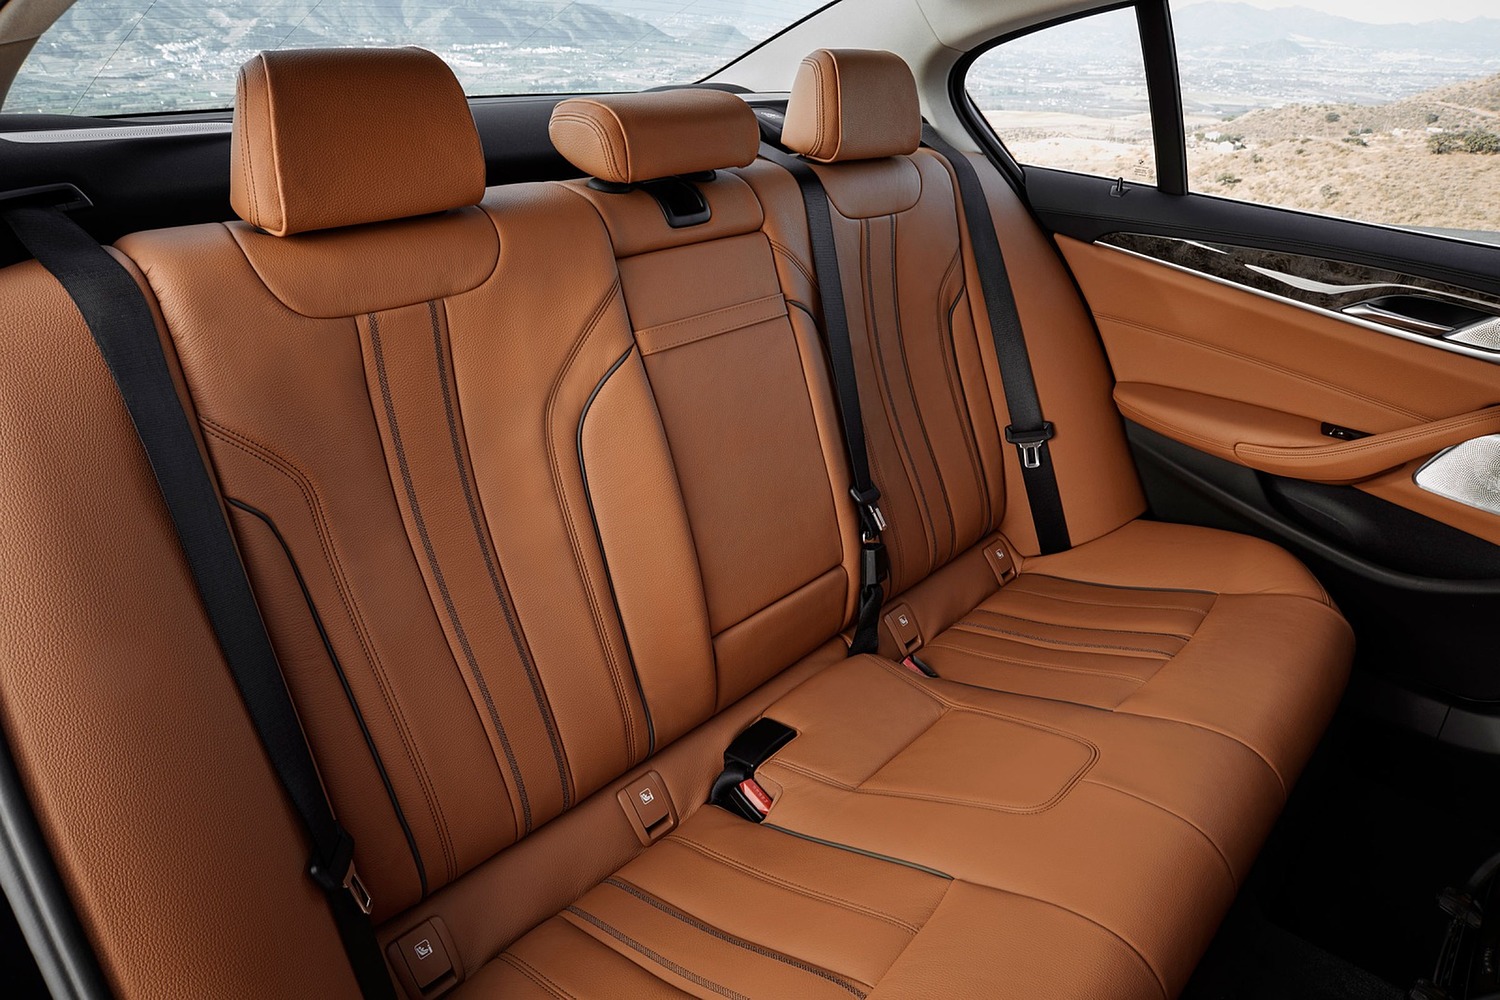 BMW 5 Series 540i Sedan Rear Interior. Options Shown. (2017 model year shown)